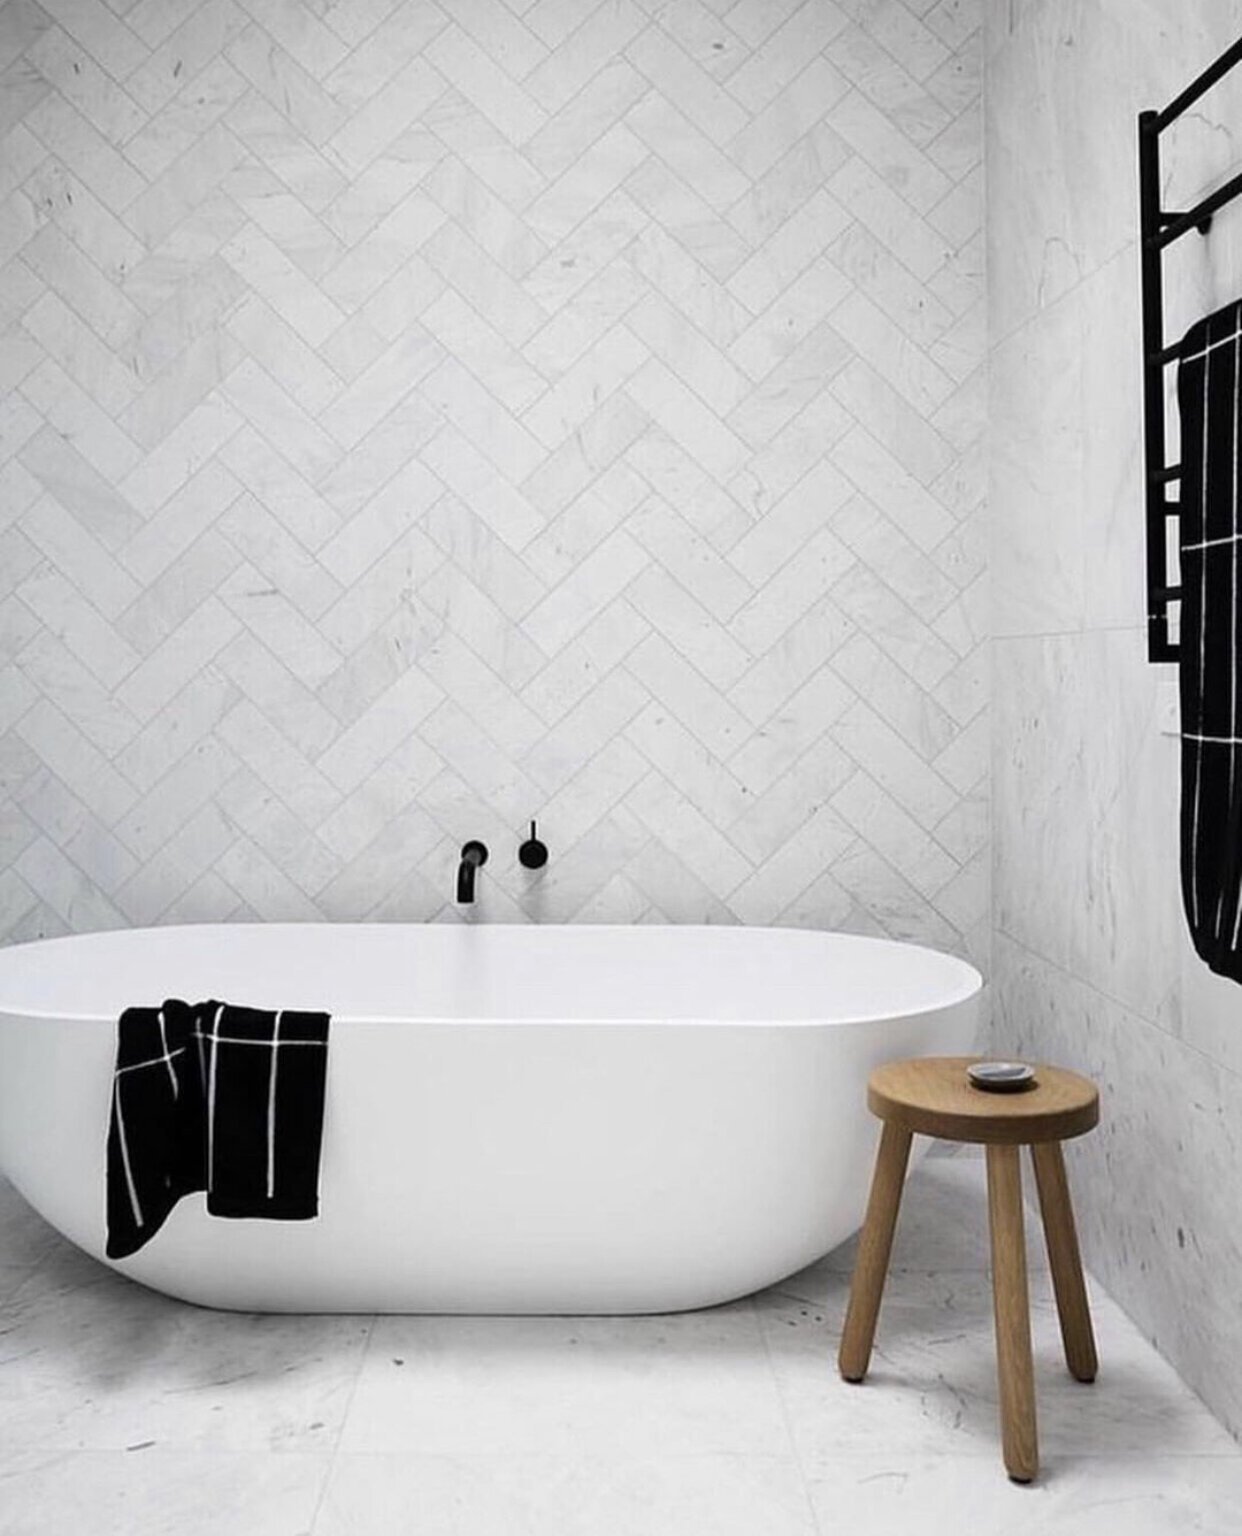 Studio Griffiths with herringbone bathroom tiles